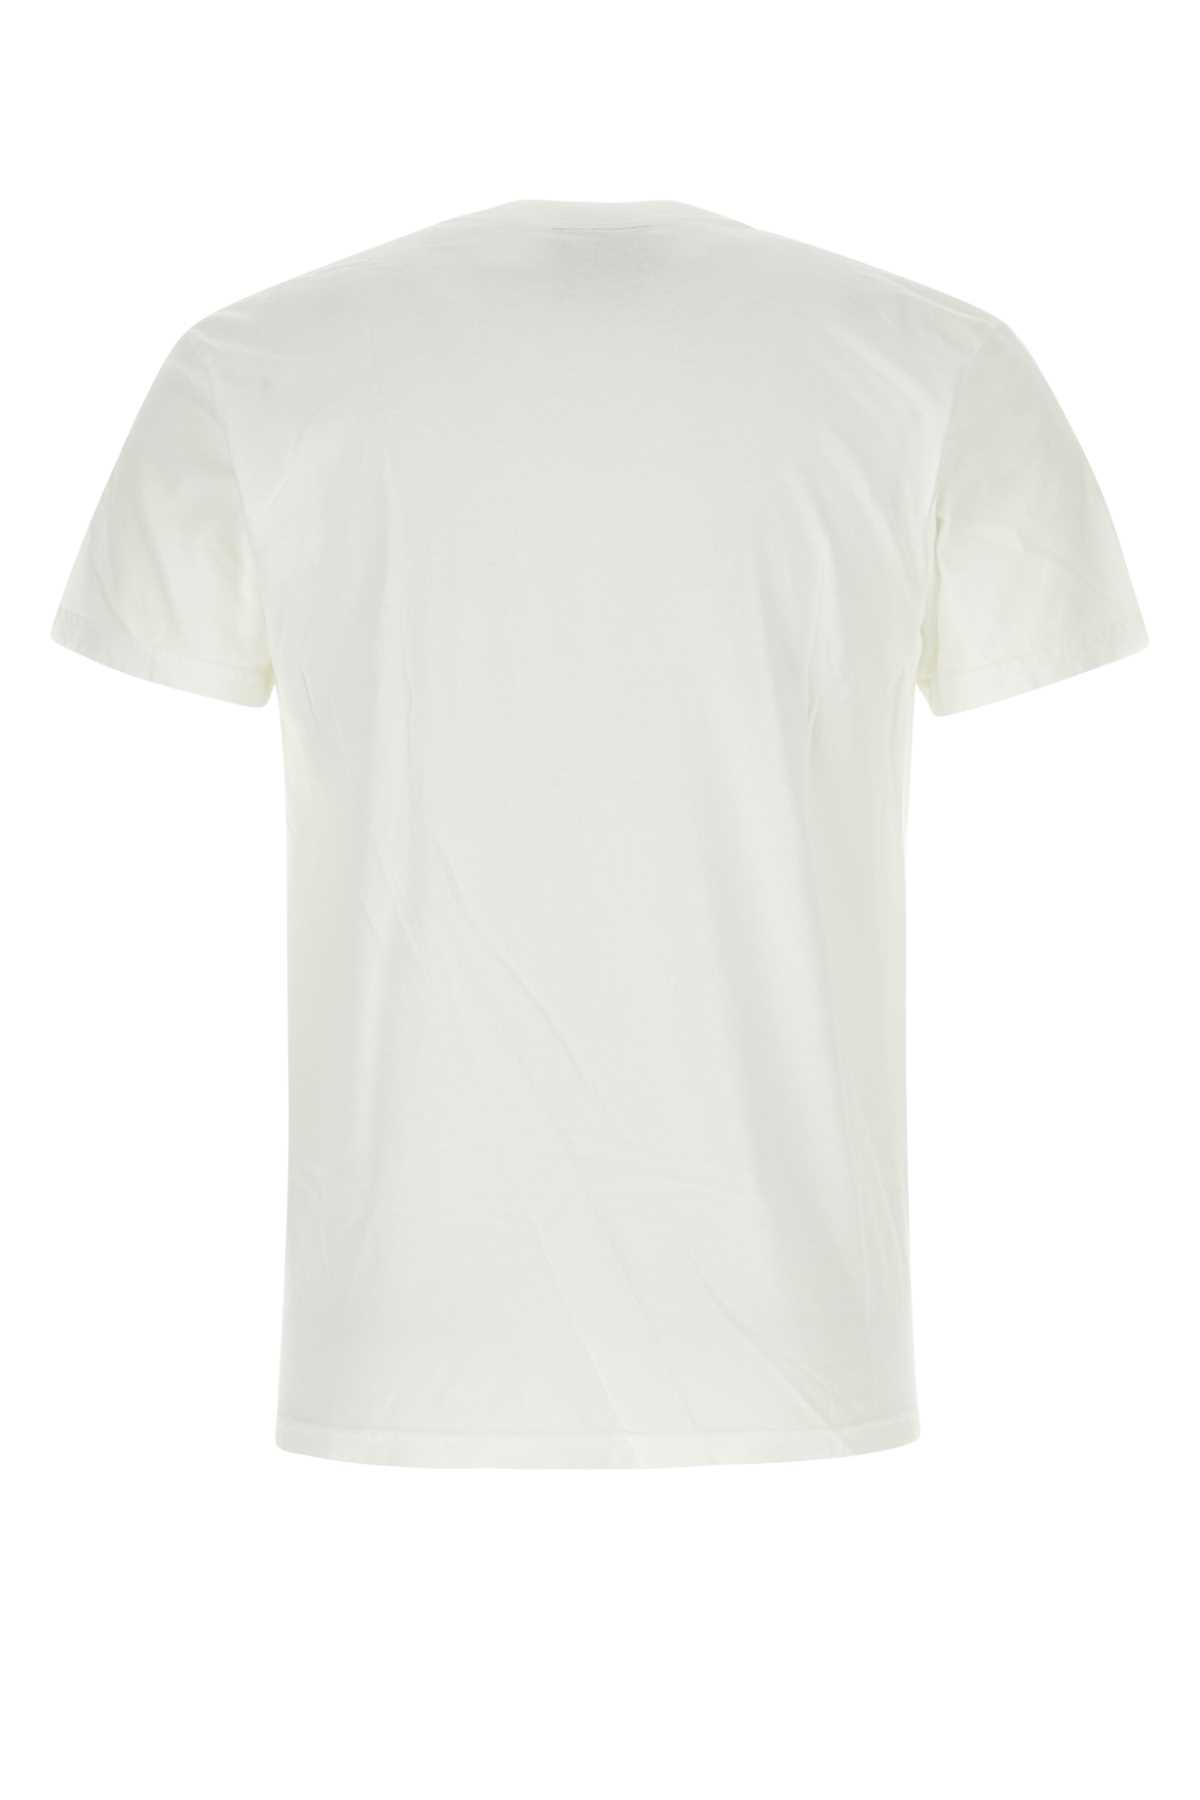 Kidsuper White Cotton T-shirt In Paintbynumberwhite